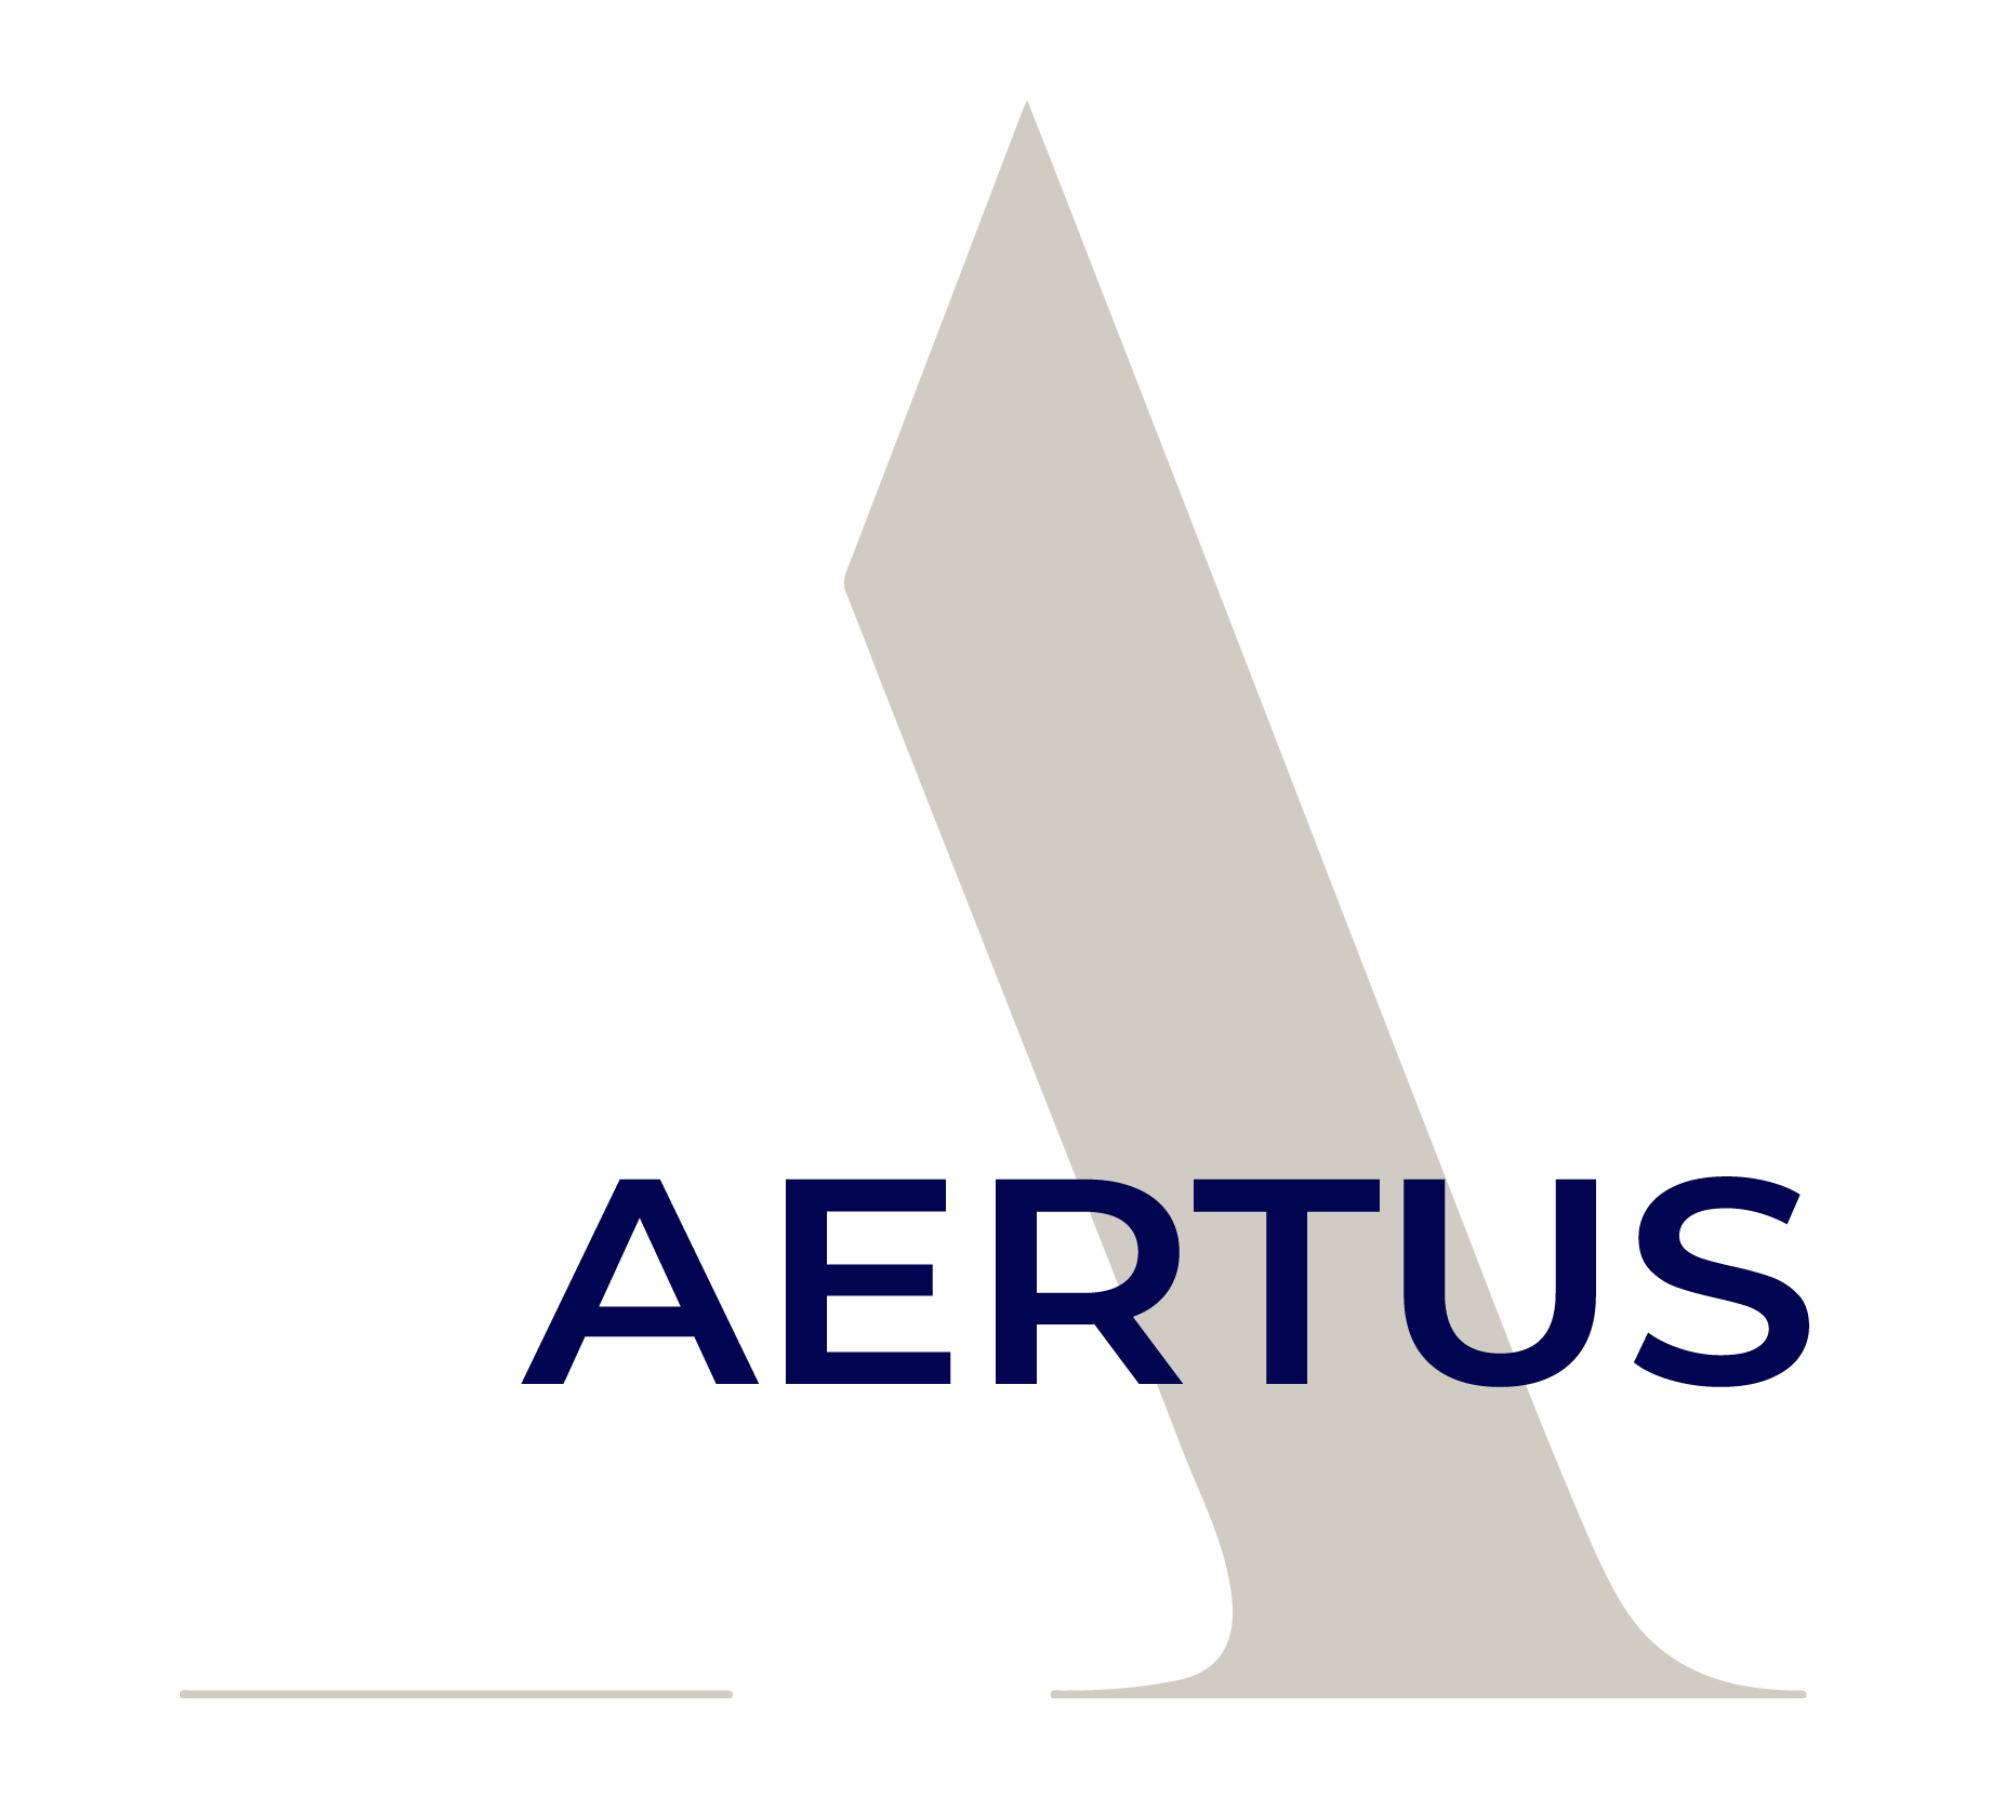 Aertus Finance